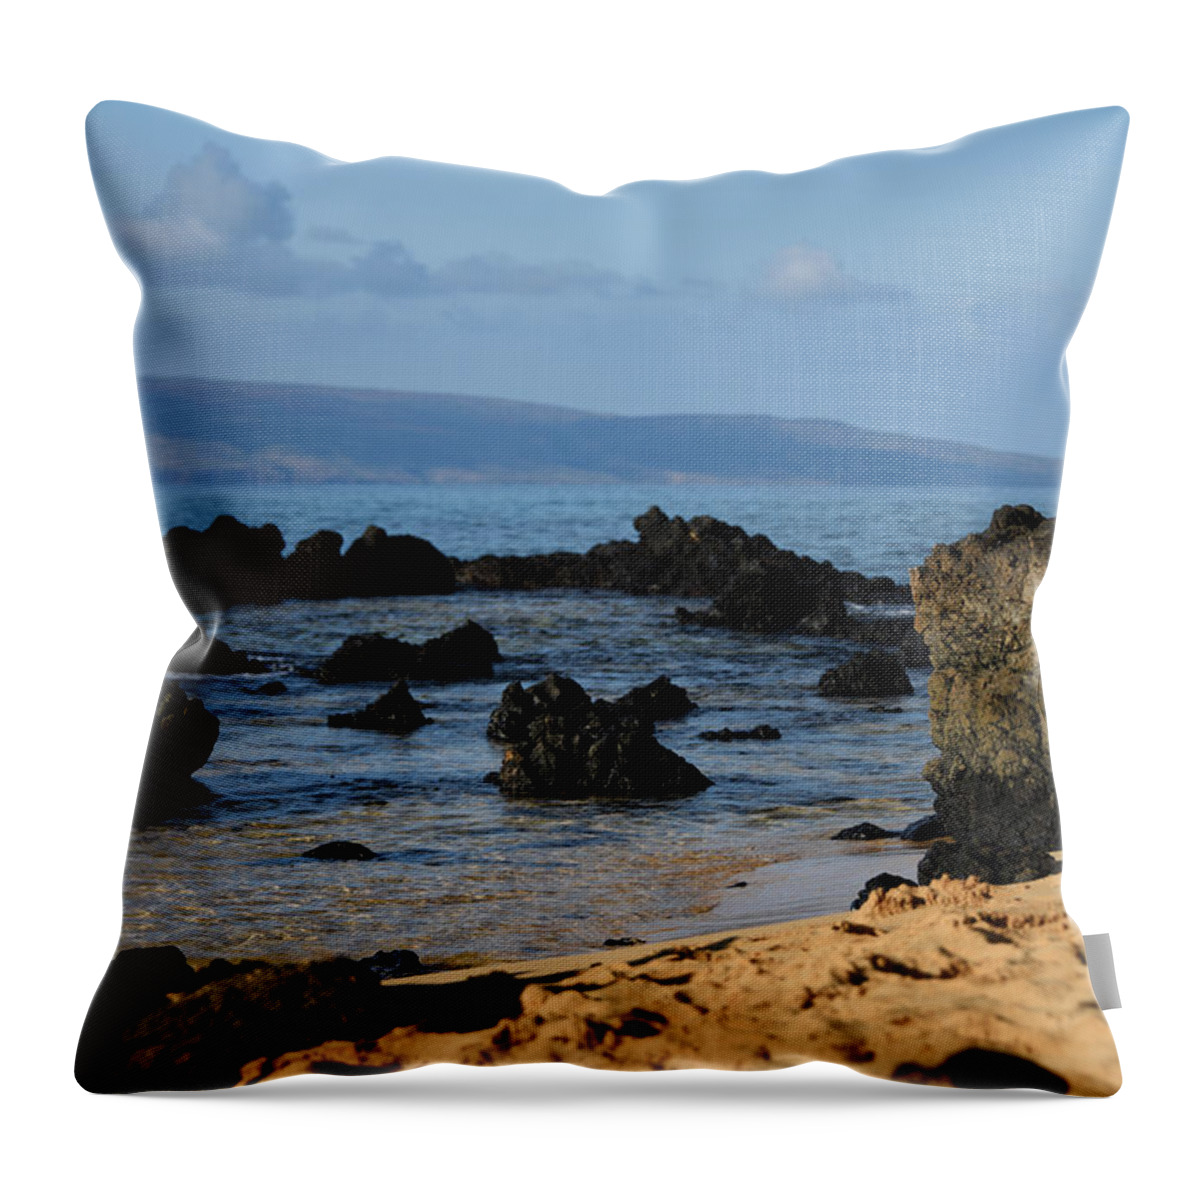 Makena Throw Pillow featuring the photograph Makena Cove Beach by Jennifer Ancker